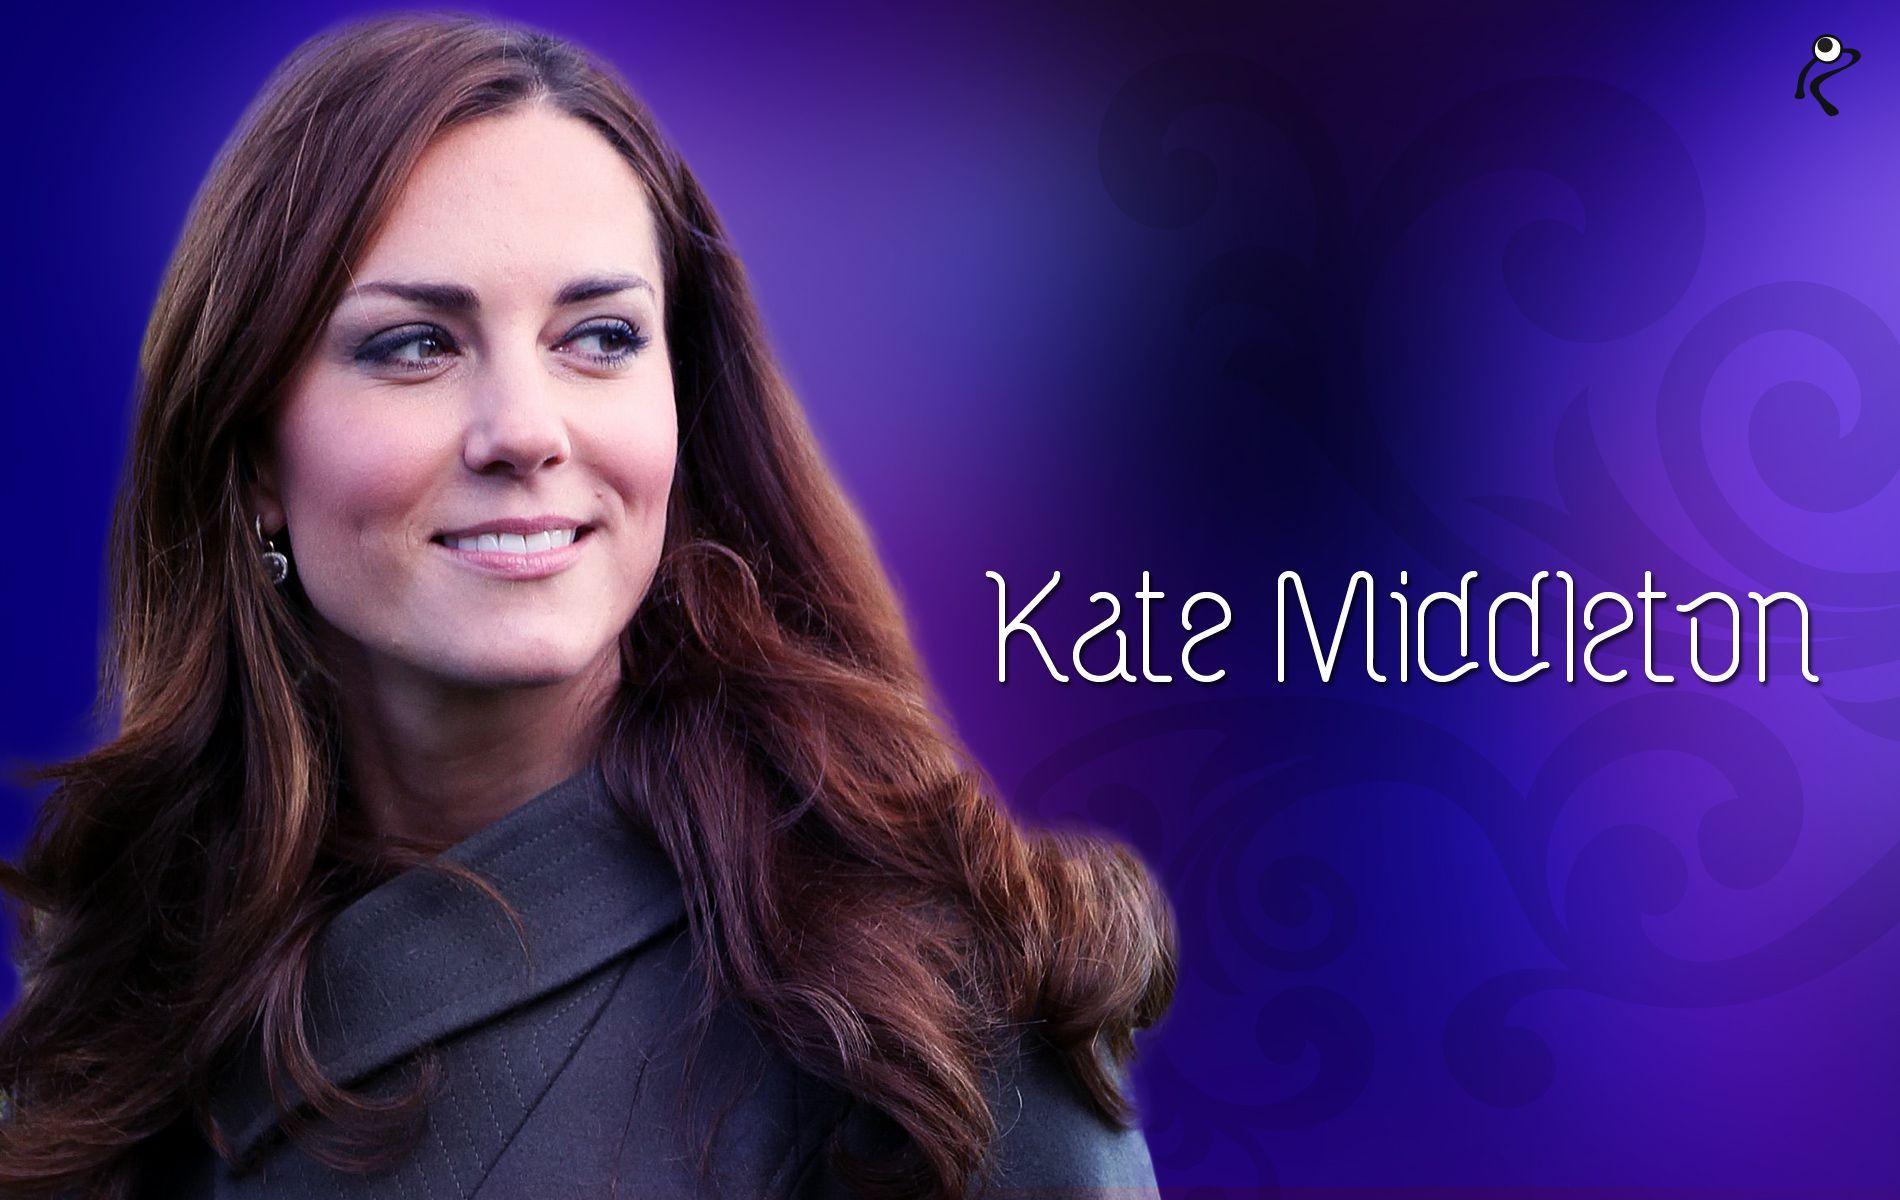 Beautiful Kate Middleton Photo Gallery